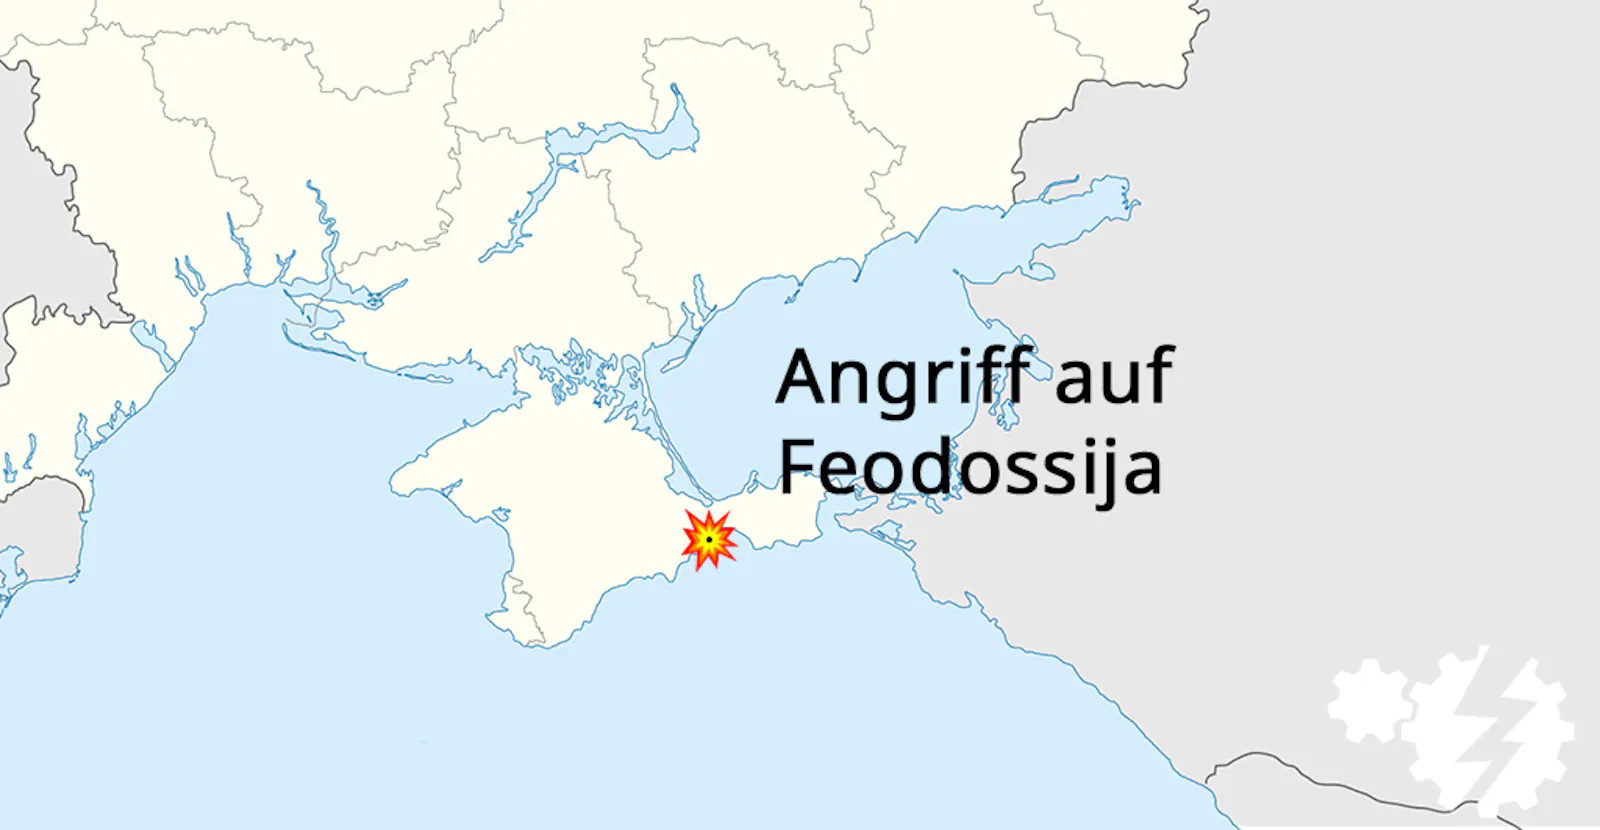 Karte der Krim mit Feodossija